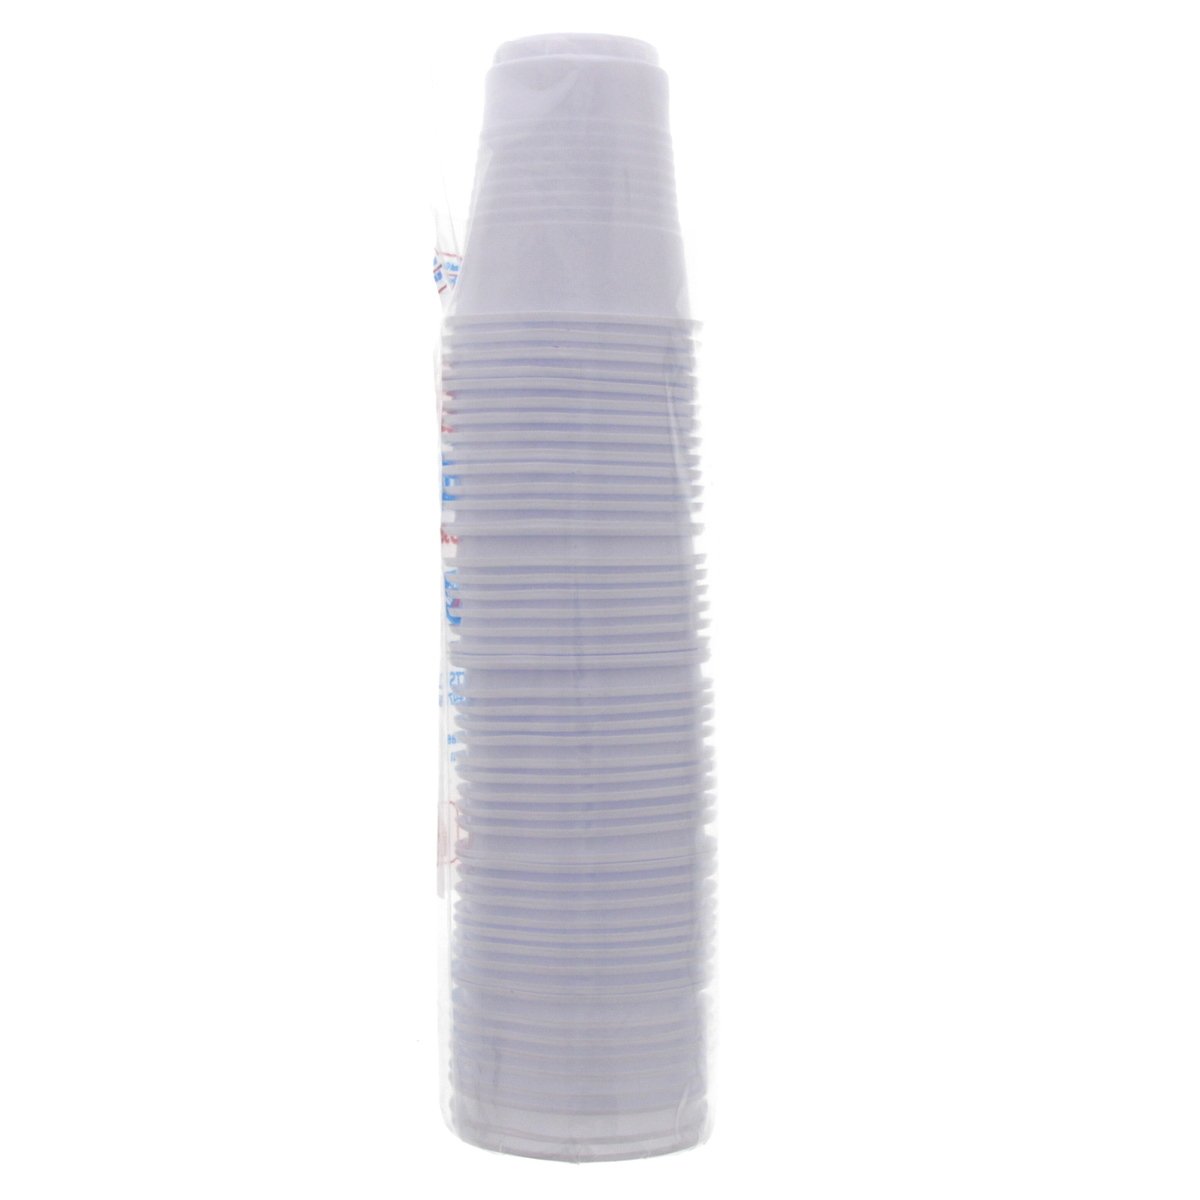 Shuaa Plastic Cup Disposable 6oz 50pcs